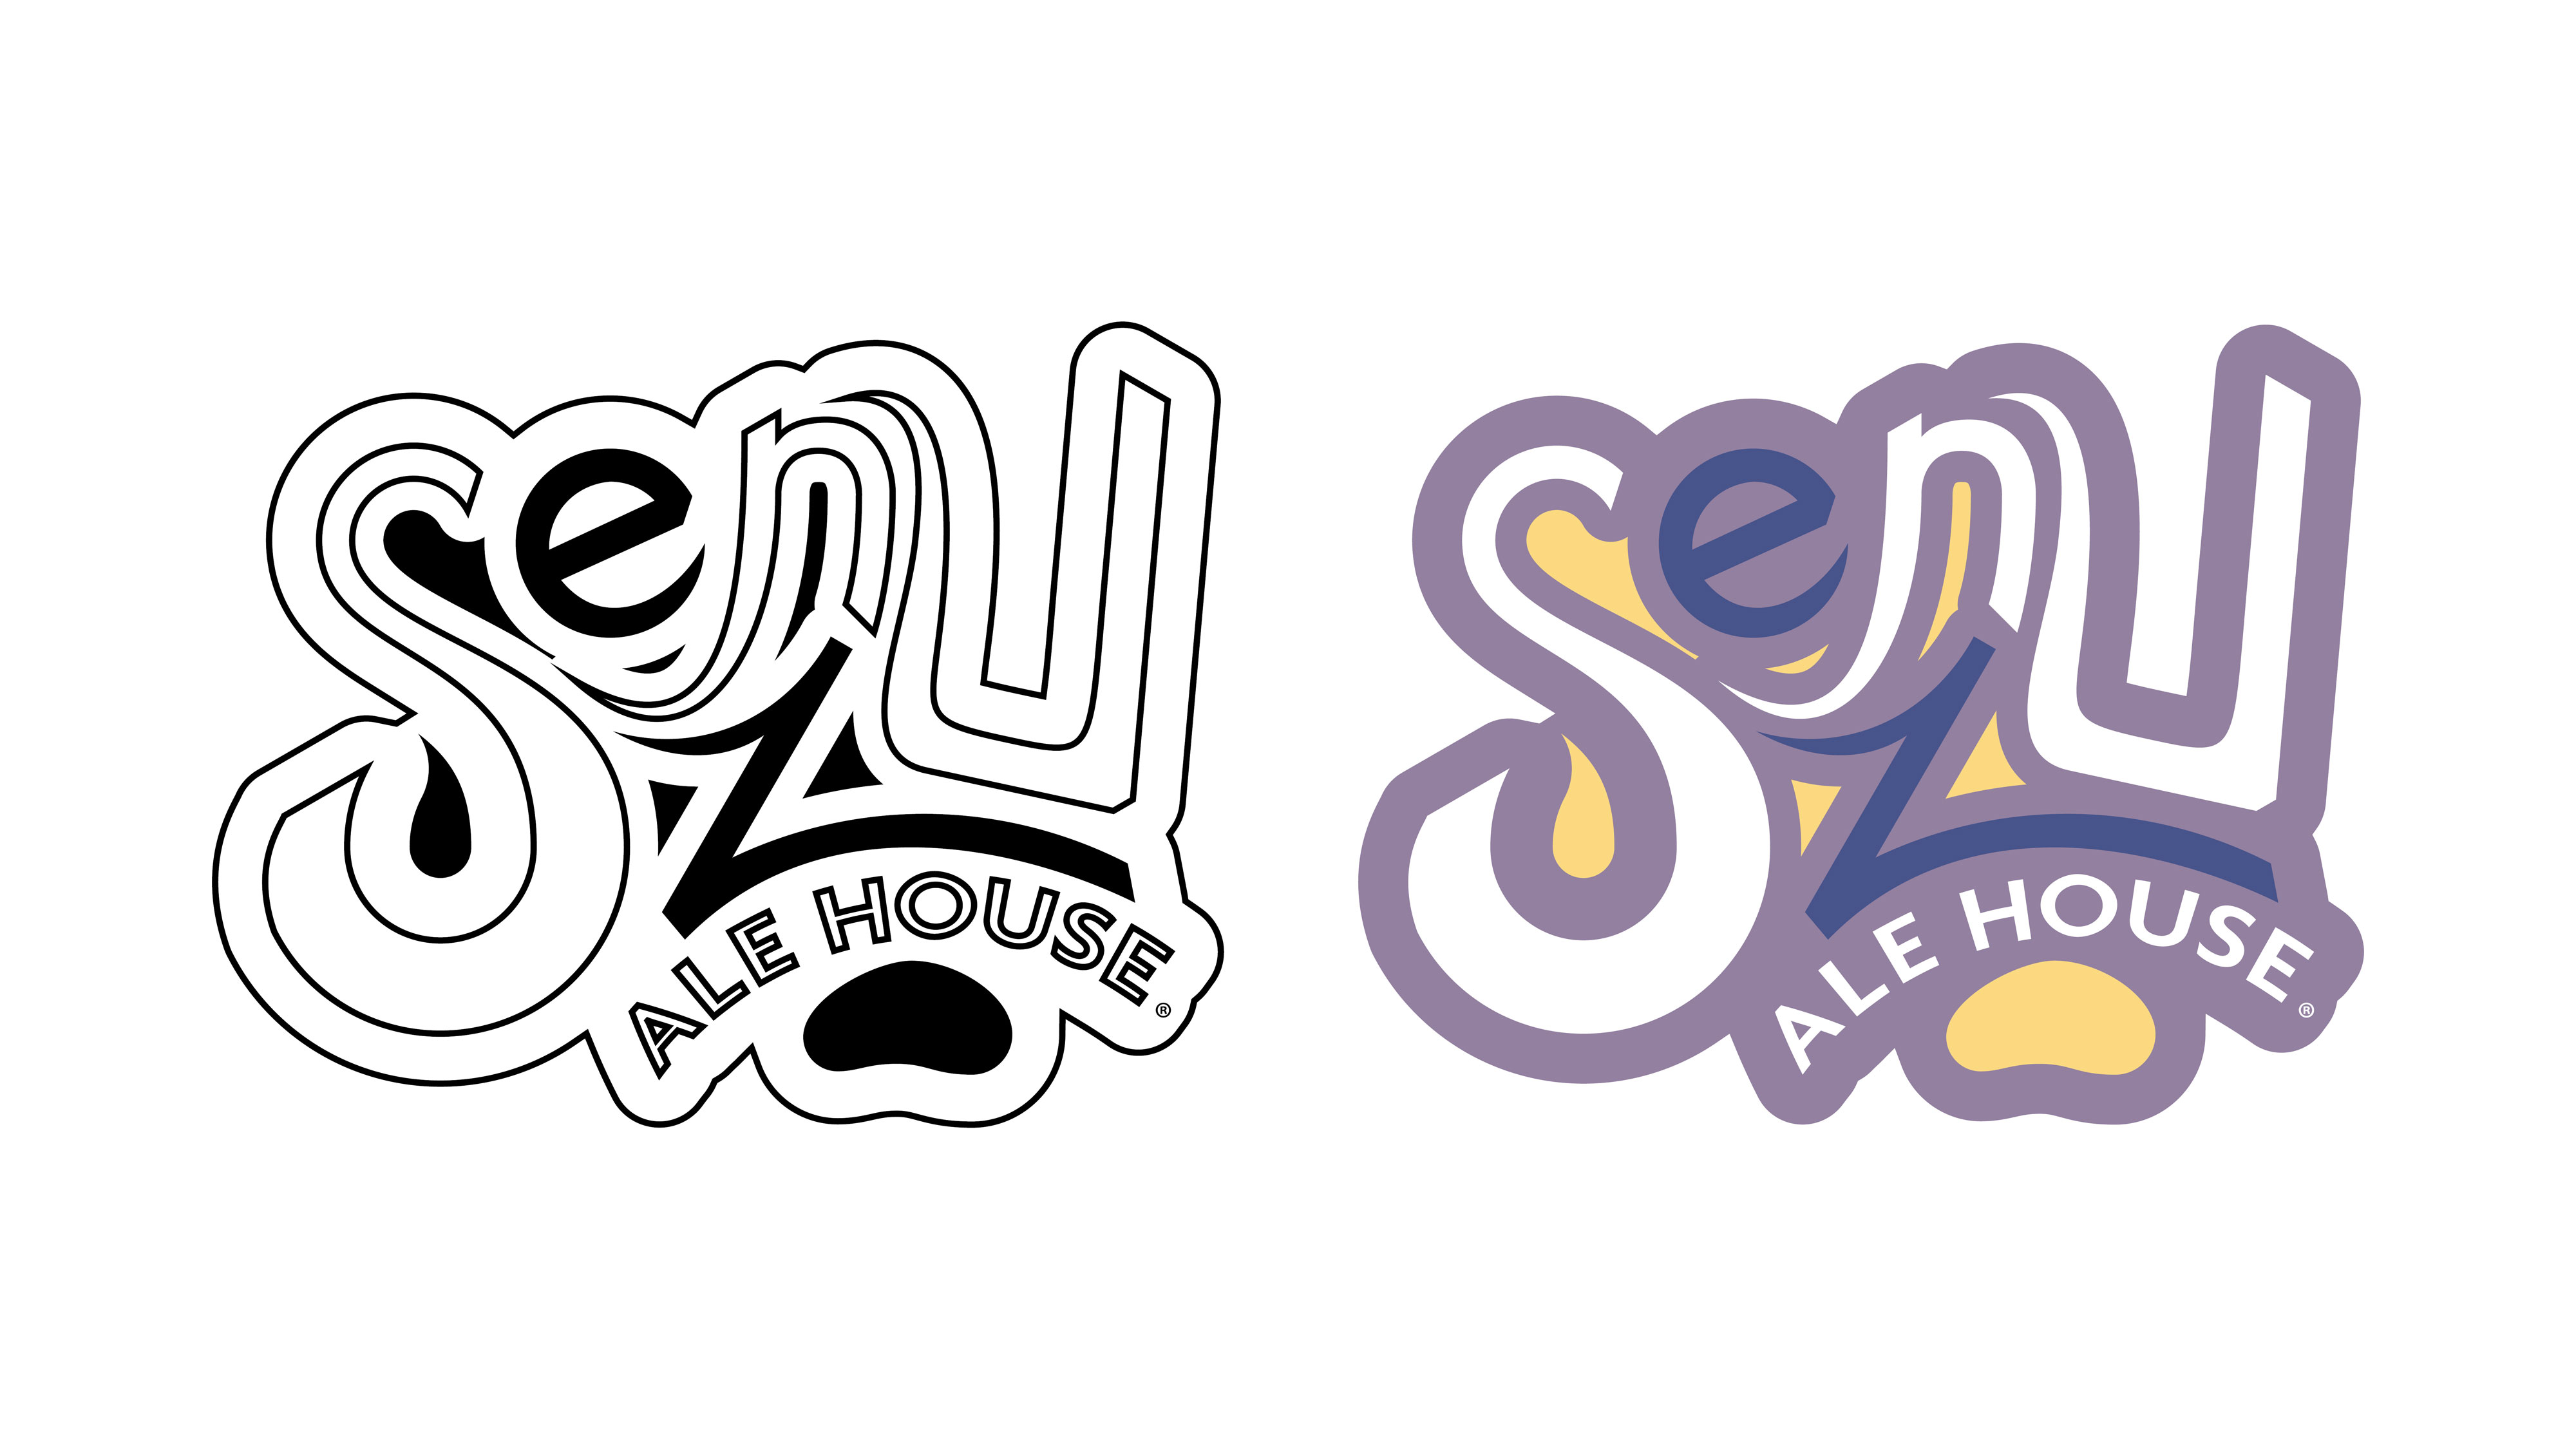 Senzu Ale House logo final